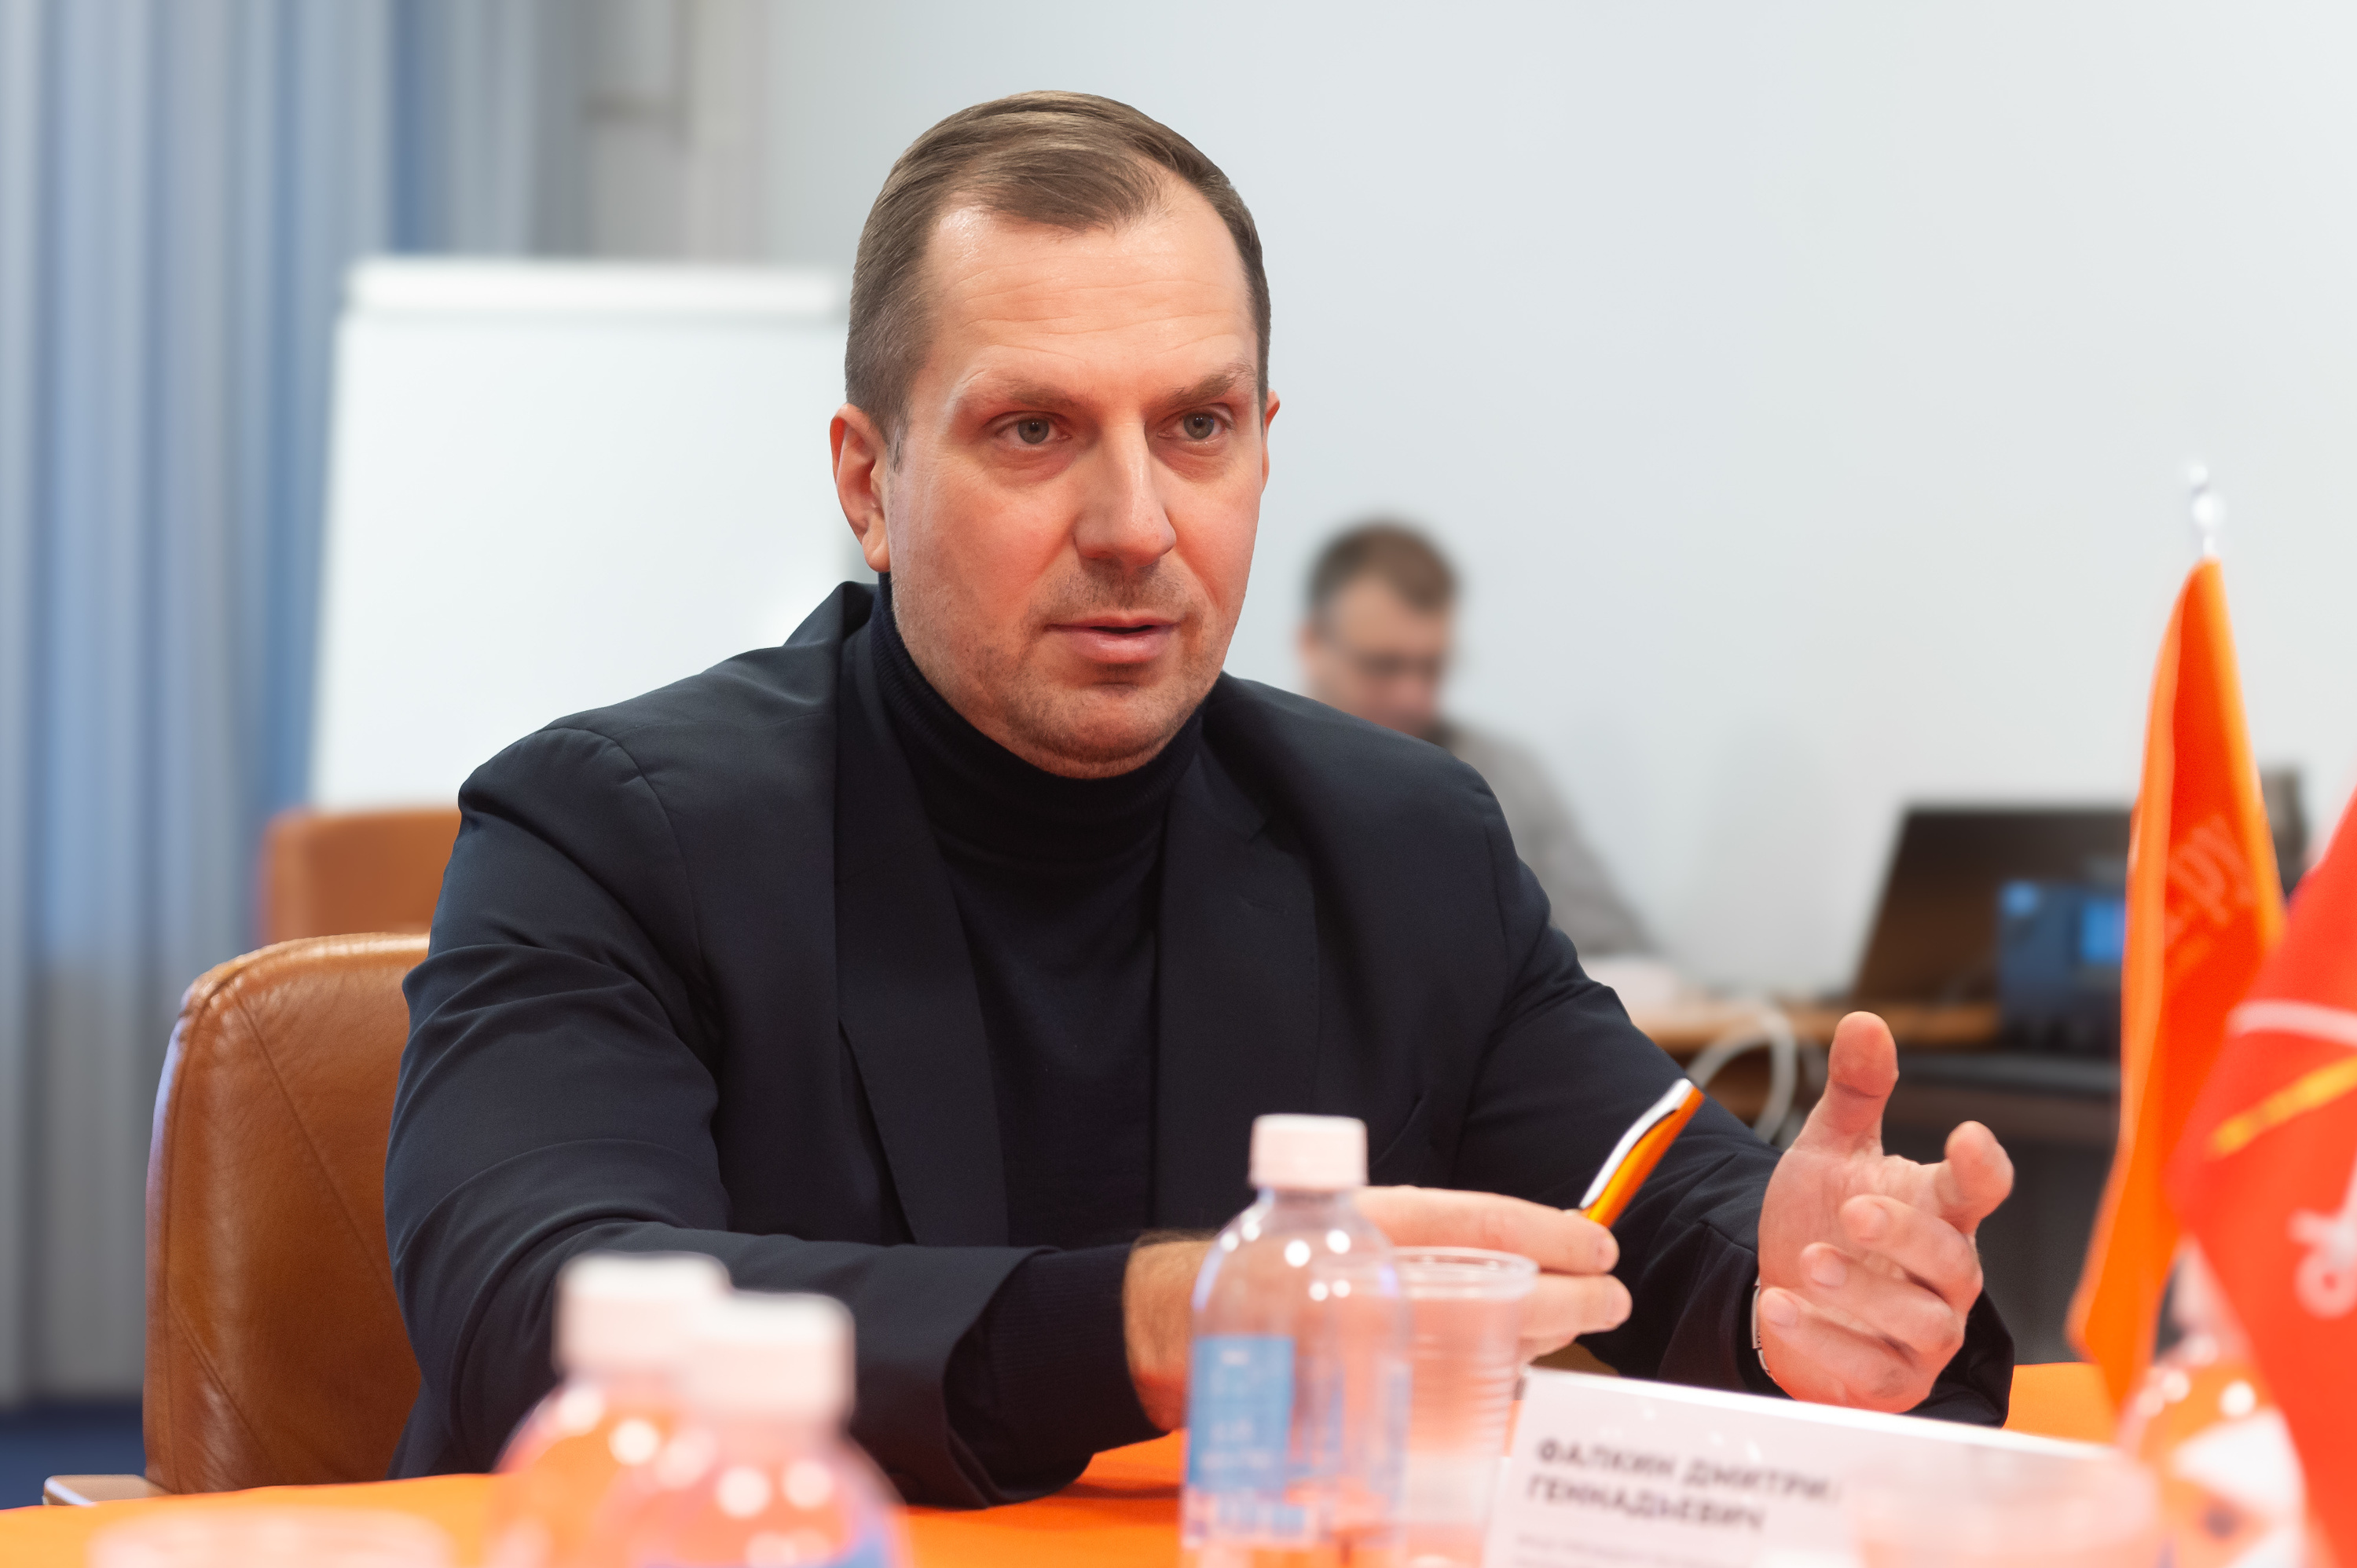 Дмитрий Фалкин, вице-президент по продажам и сервису Группы RBI